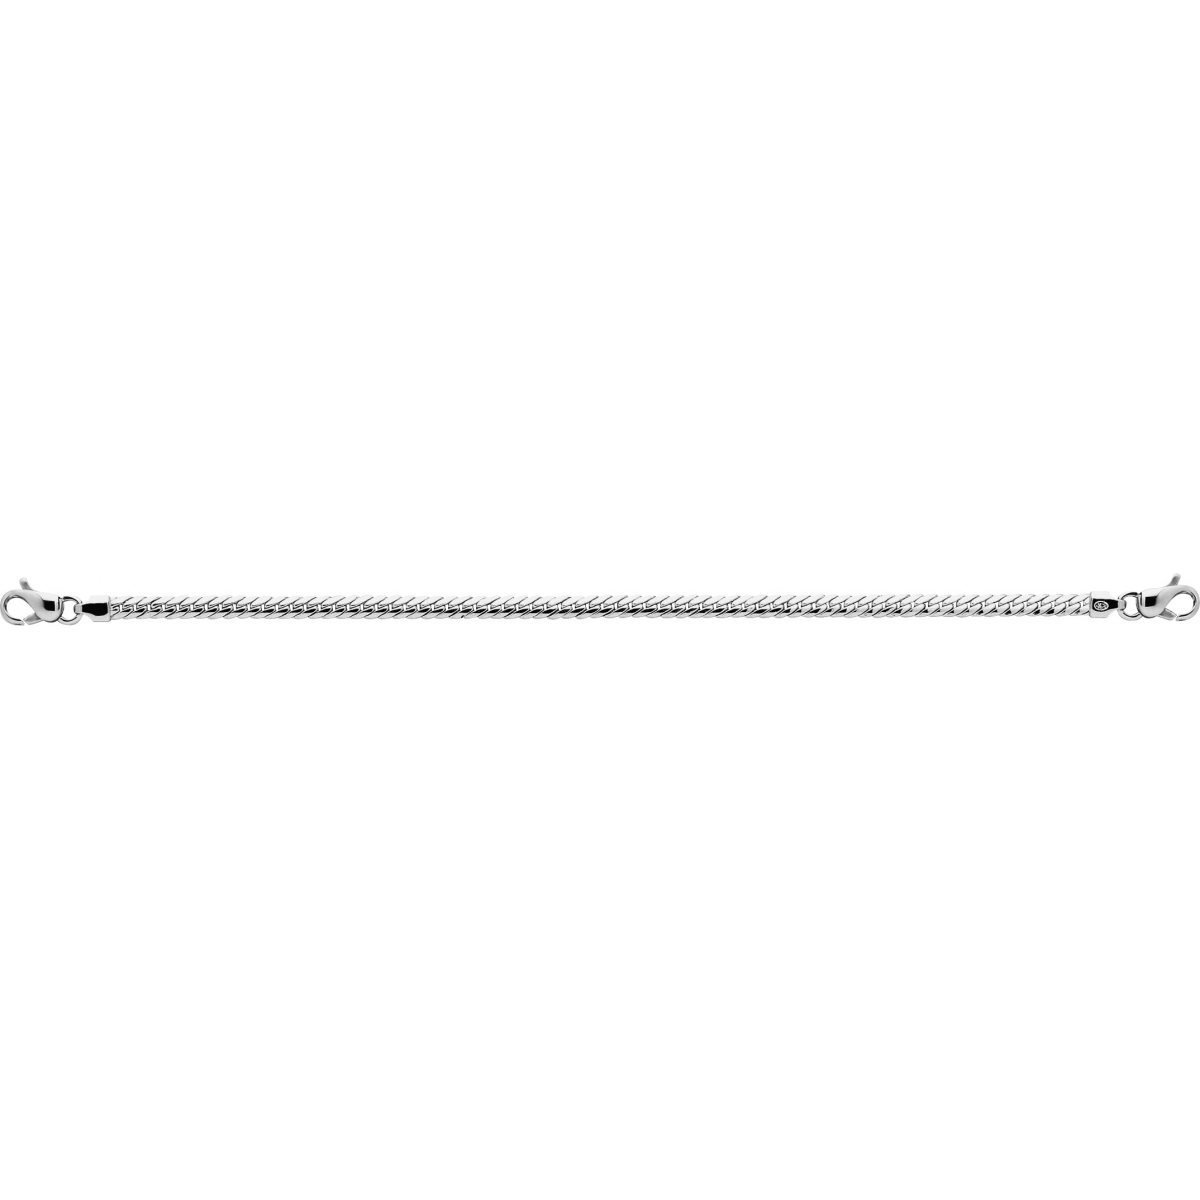 Bracelet 'double curb chain' hollow 18K WG Lua Blanca  3234L - Size 18